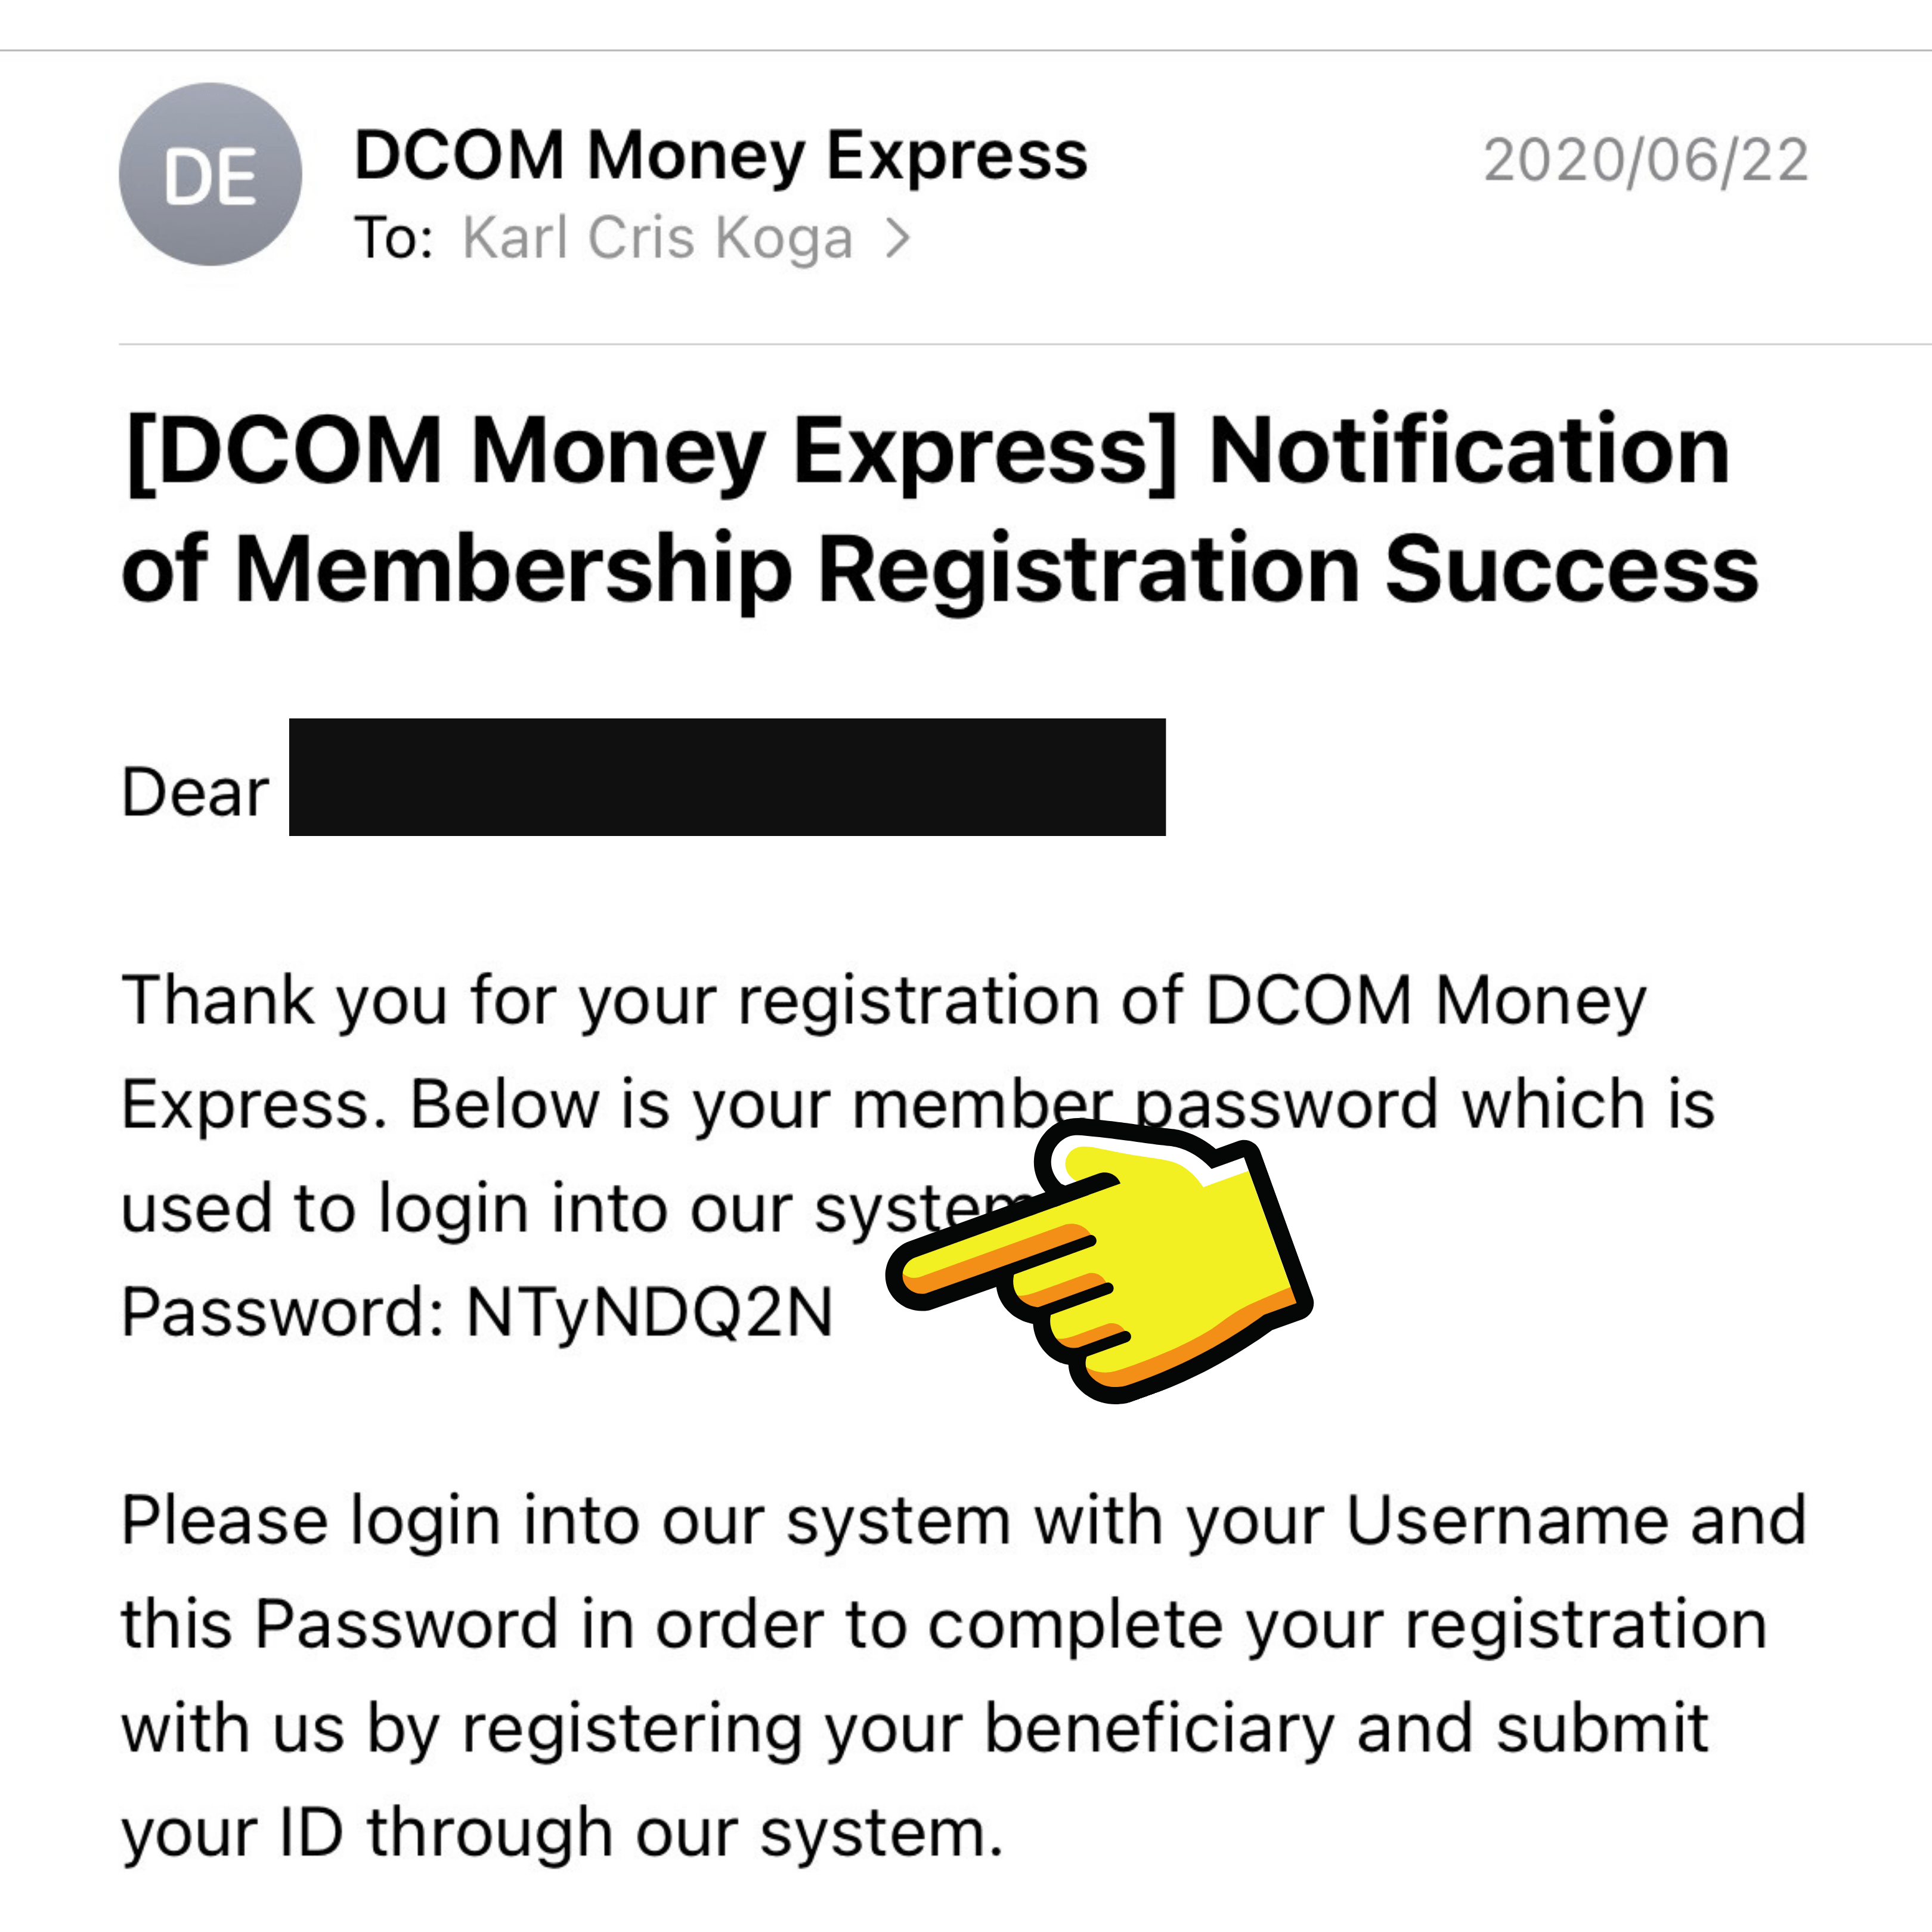 Copy-paste your password to the DCOM App